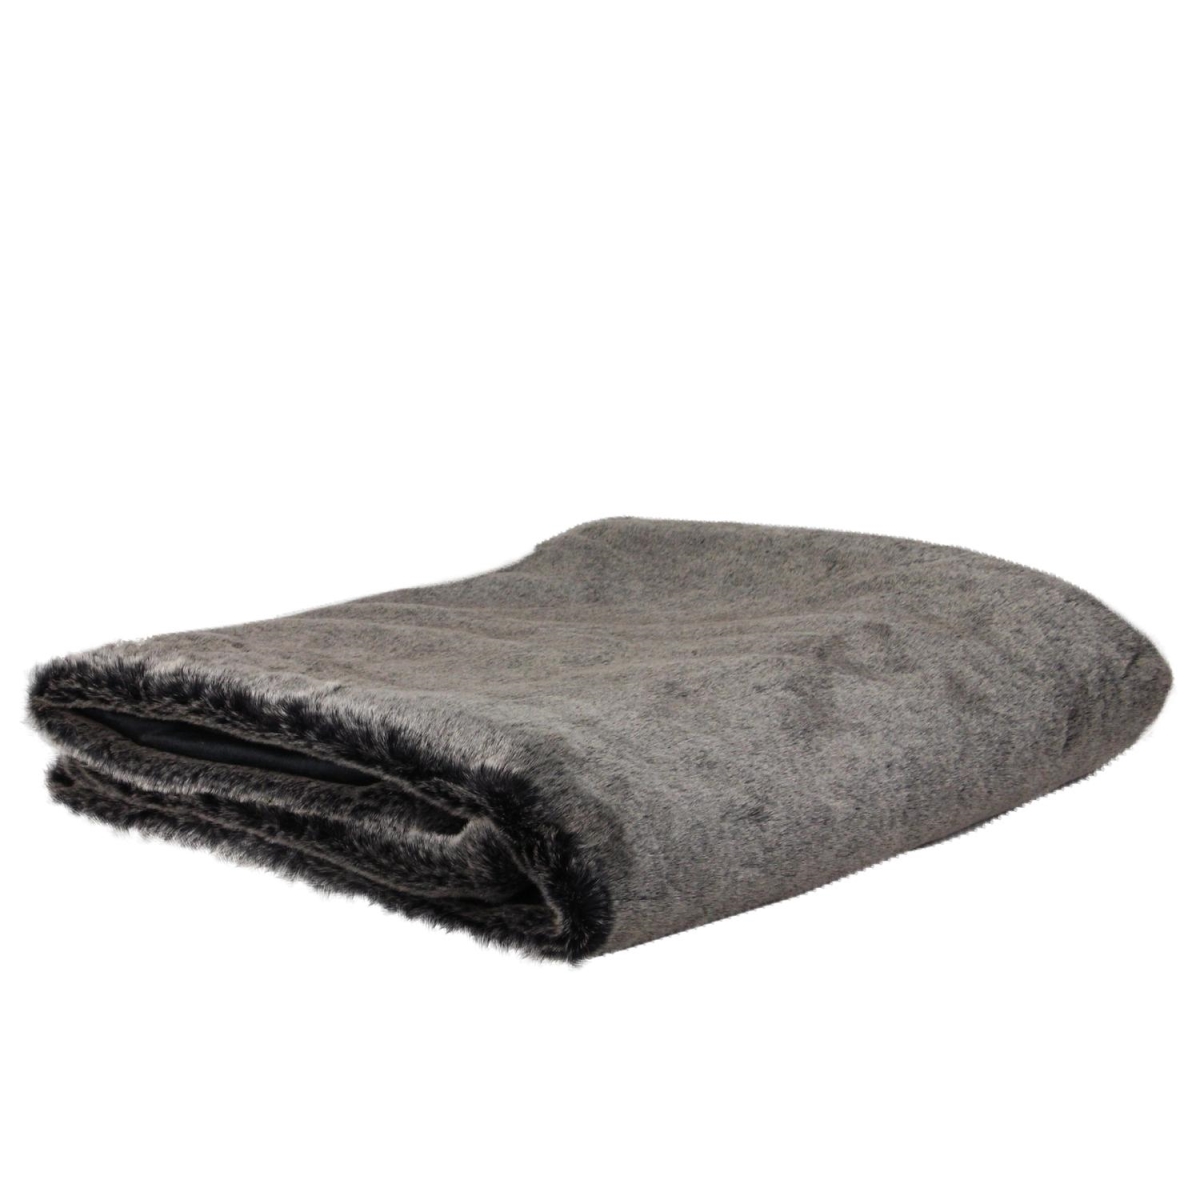 32667179 50 X 60 In. Brown Faux Fur Plush Throw Blanket